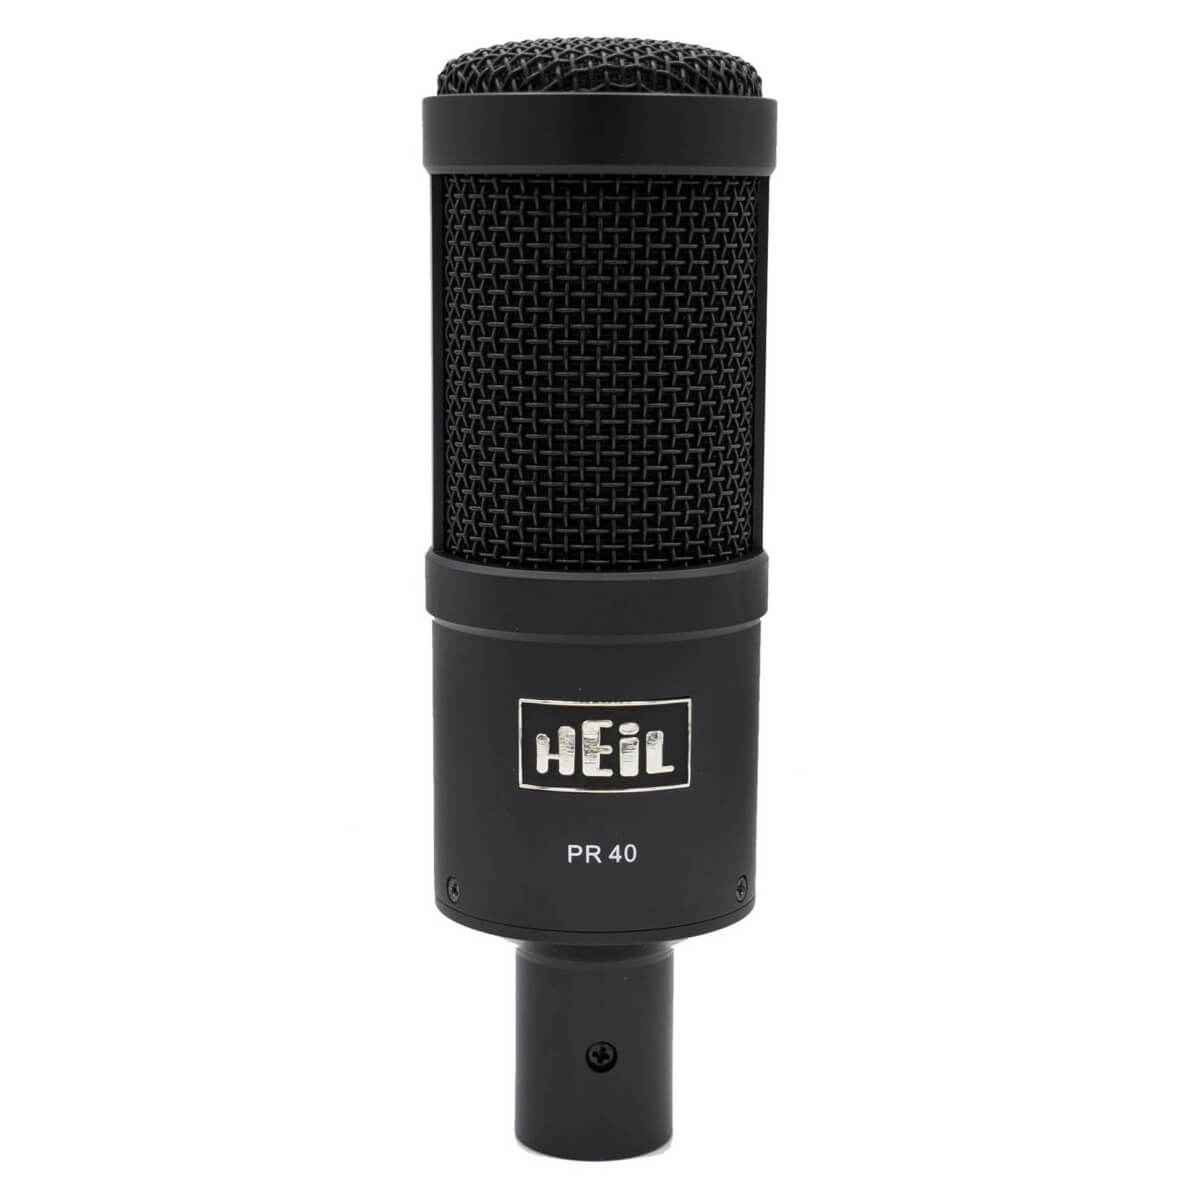 Heil PR 40 Large Diaphragm Studio Microphone, black